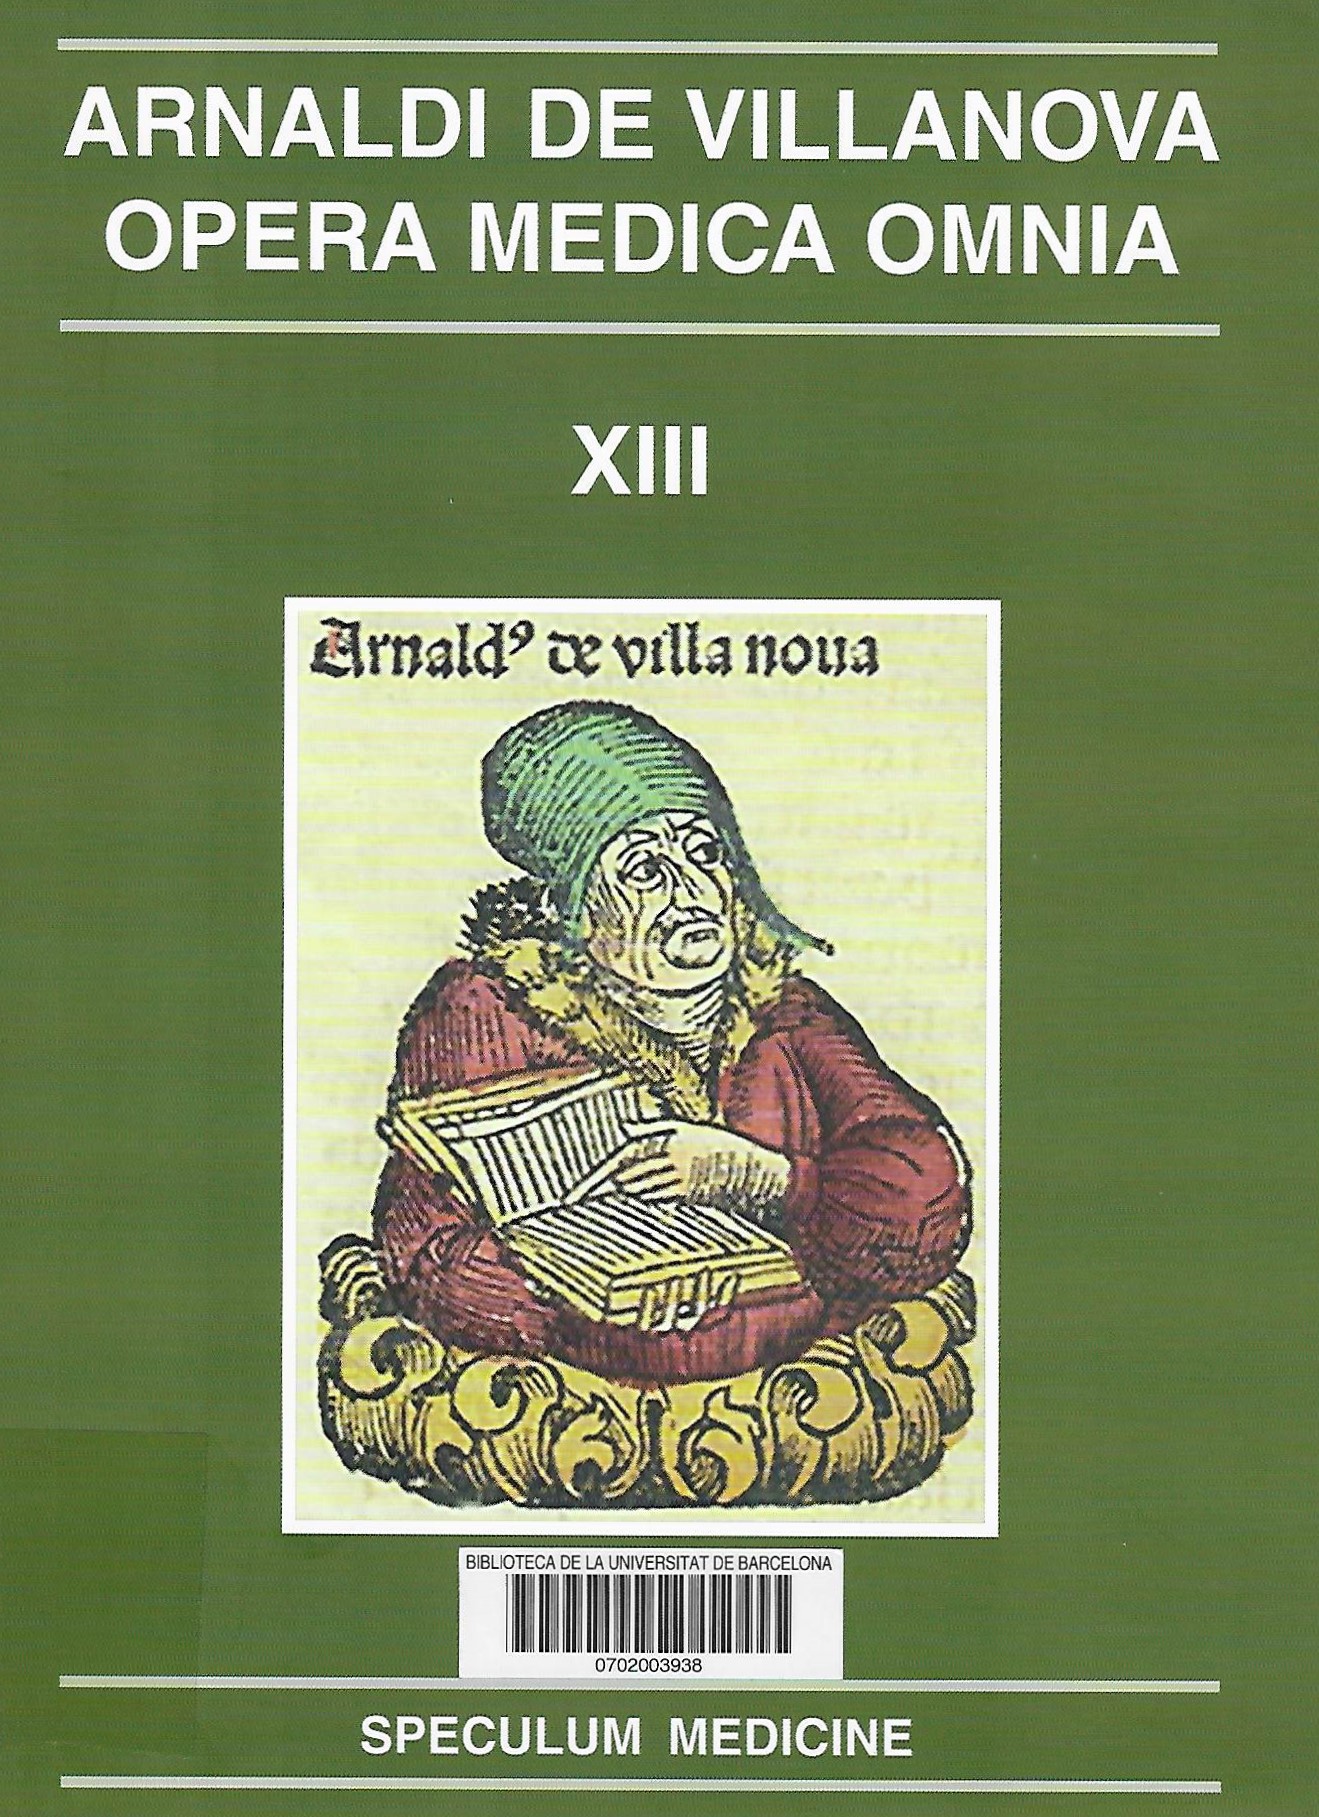 Imagen de portada del libro Arnau de Vilanova. Arnaldi de Villanova Opera Medica Omnia, XIII: Speculum medicine